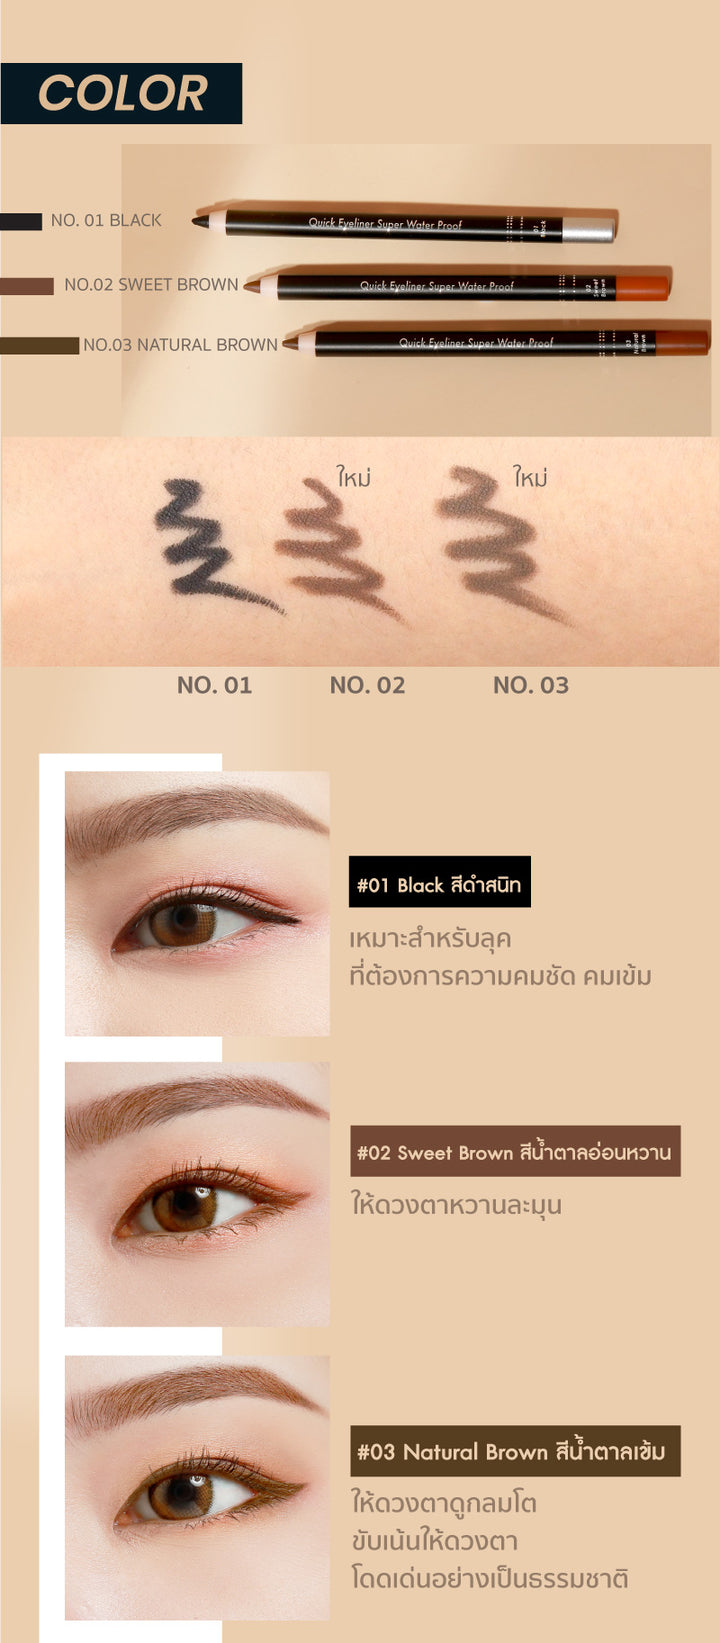 Meilinda Quick Eyeliner Super Water Proof 0.75g No.1 Black (Thai)